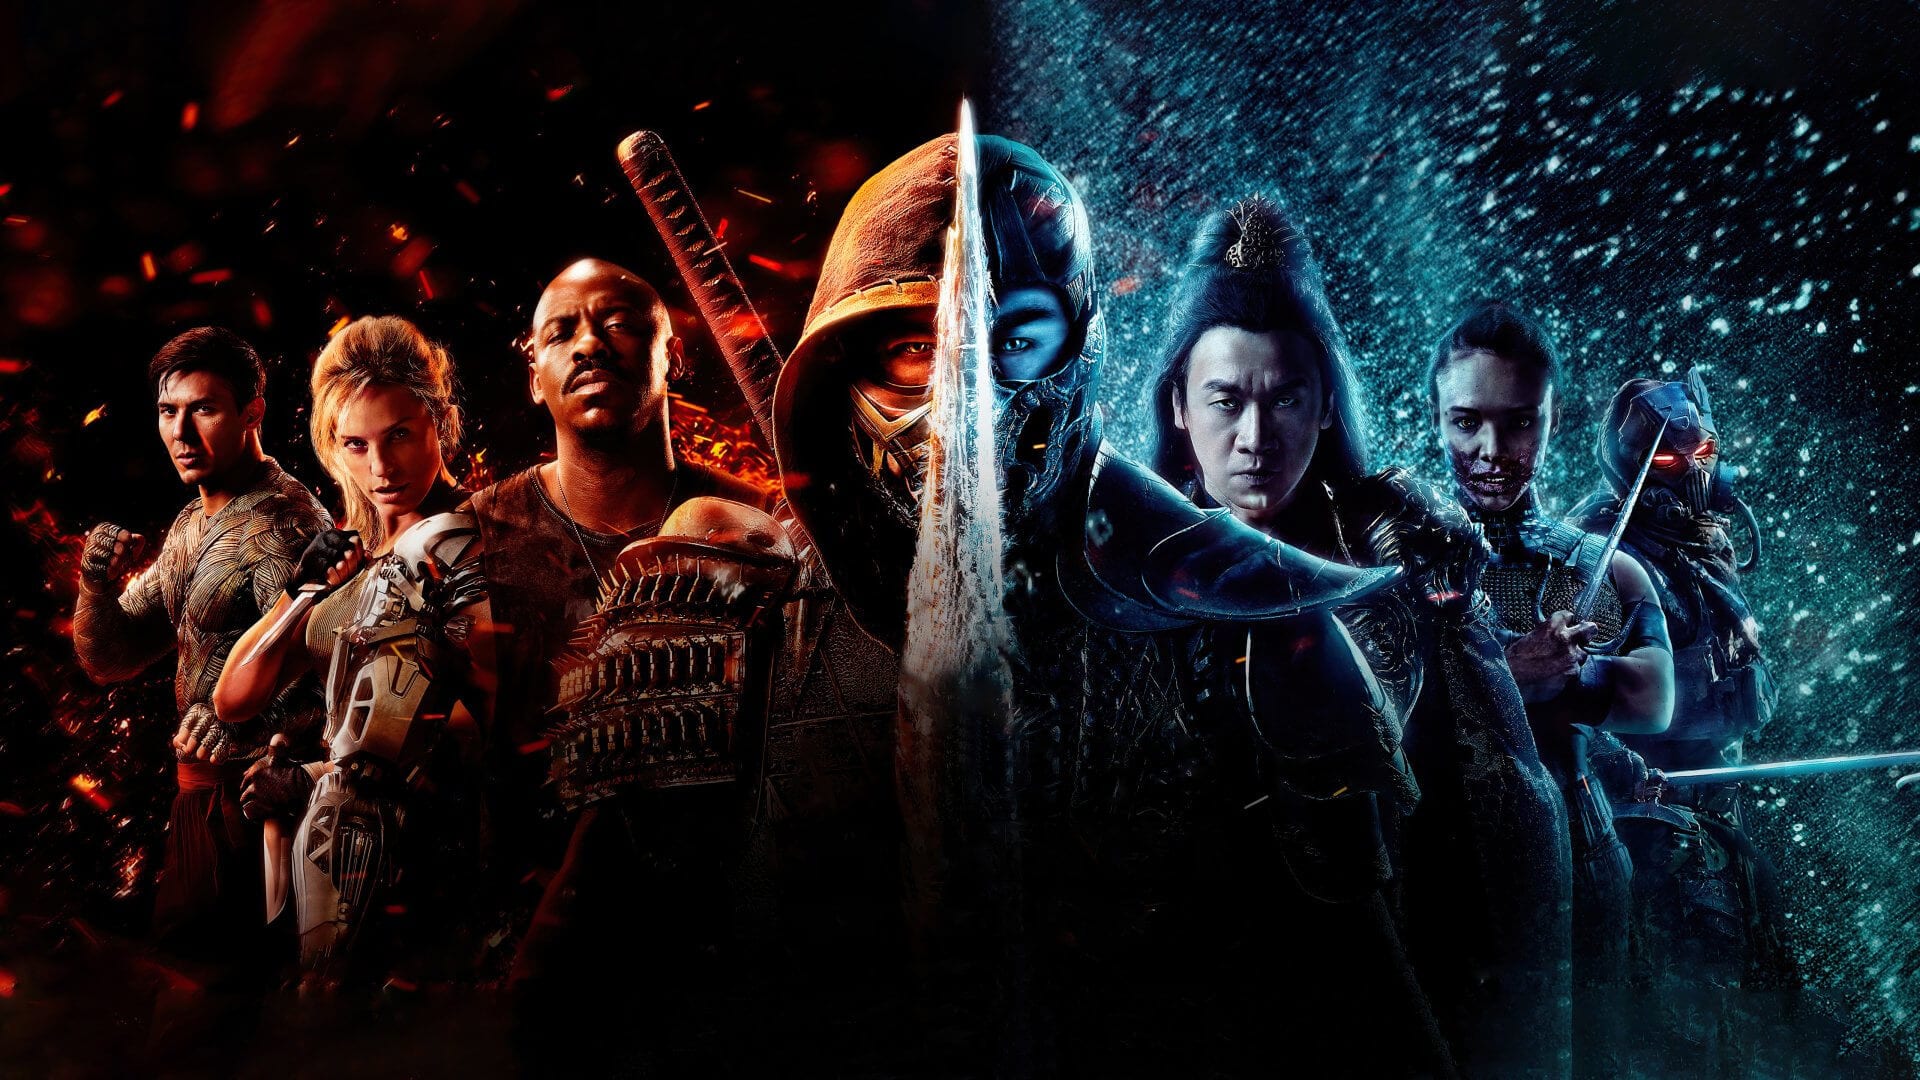 Mortal Kombat 12: jogo deve ser lançado antes de Injustice 3